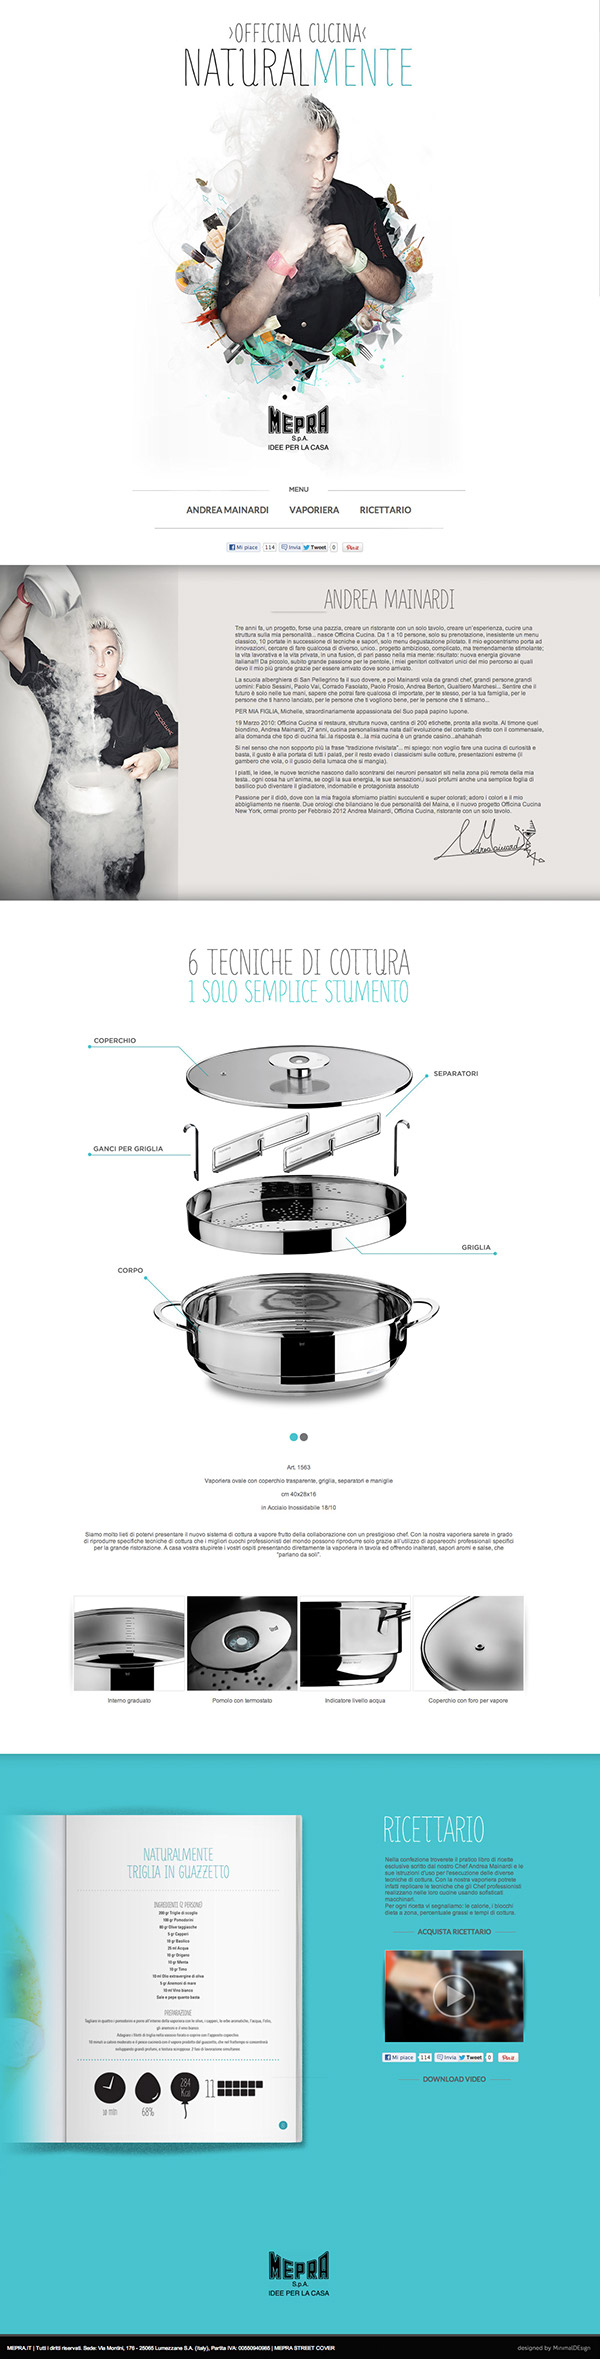 mepra minimaldesign minimal design mainardi chef italian Italy cook Naturalmente officina cucina